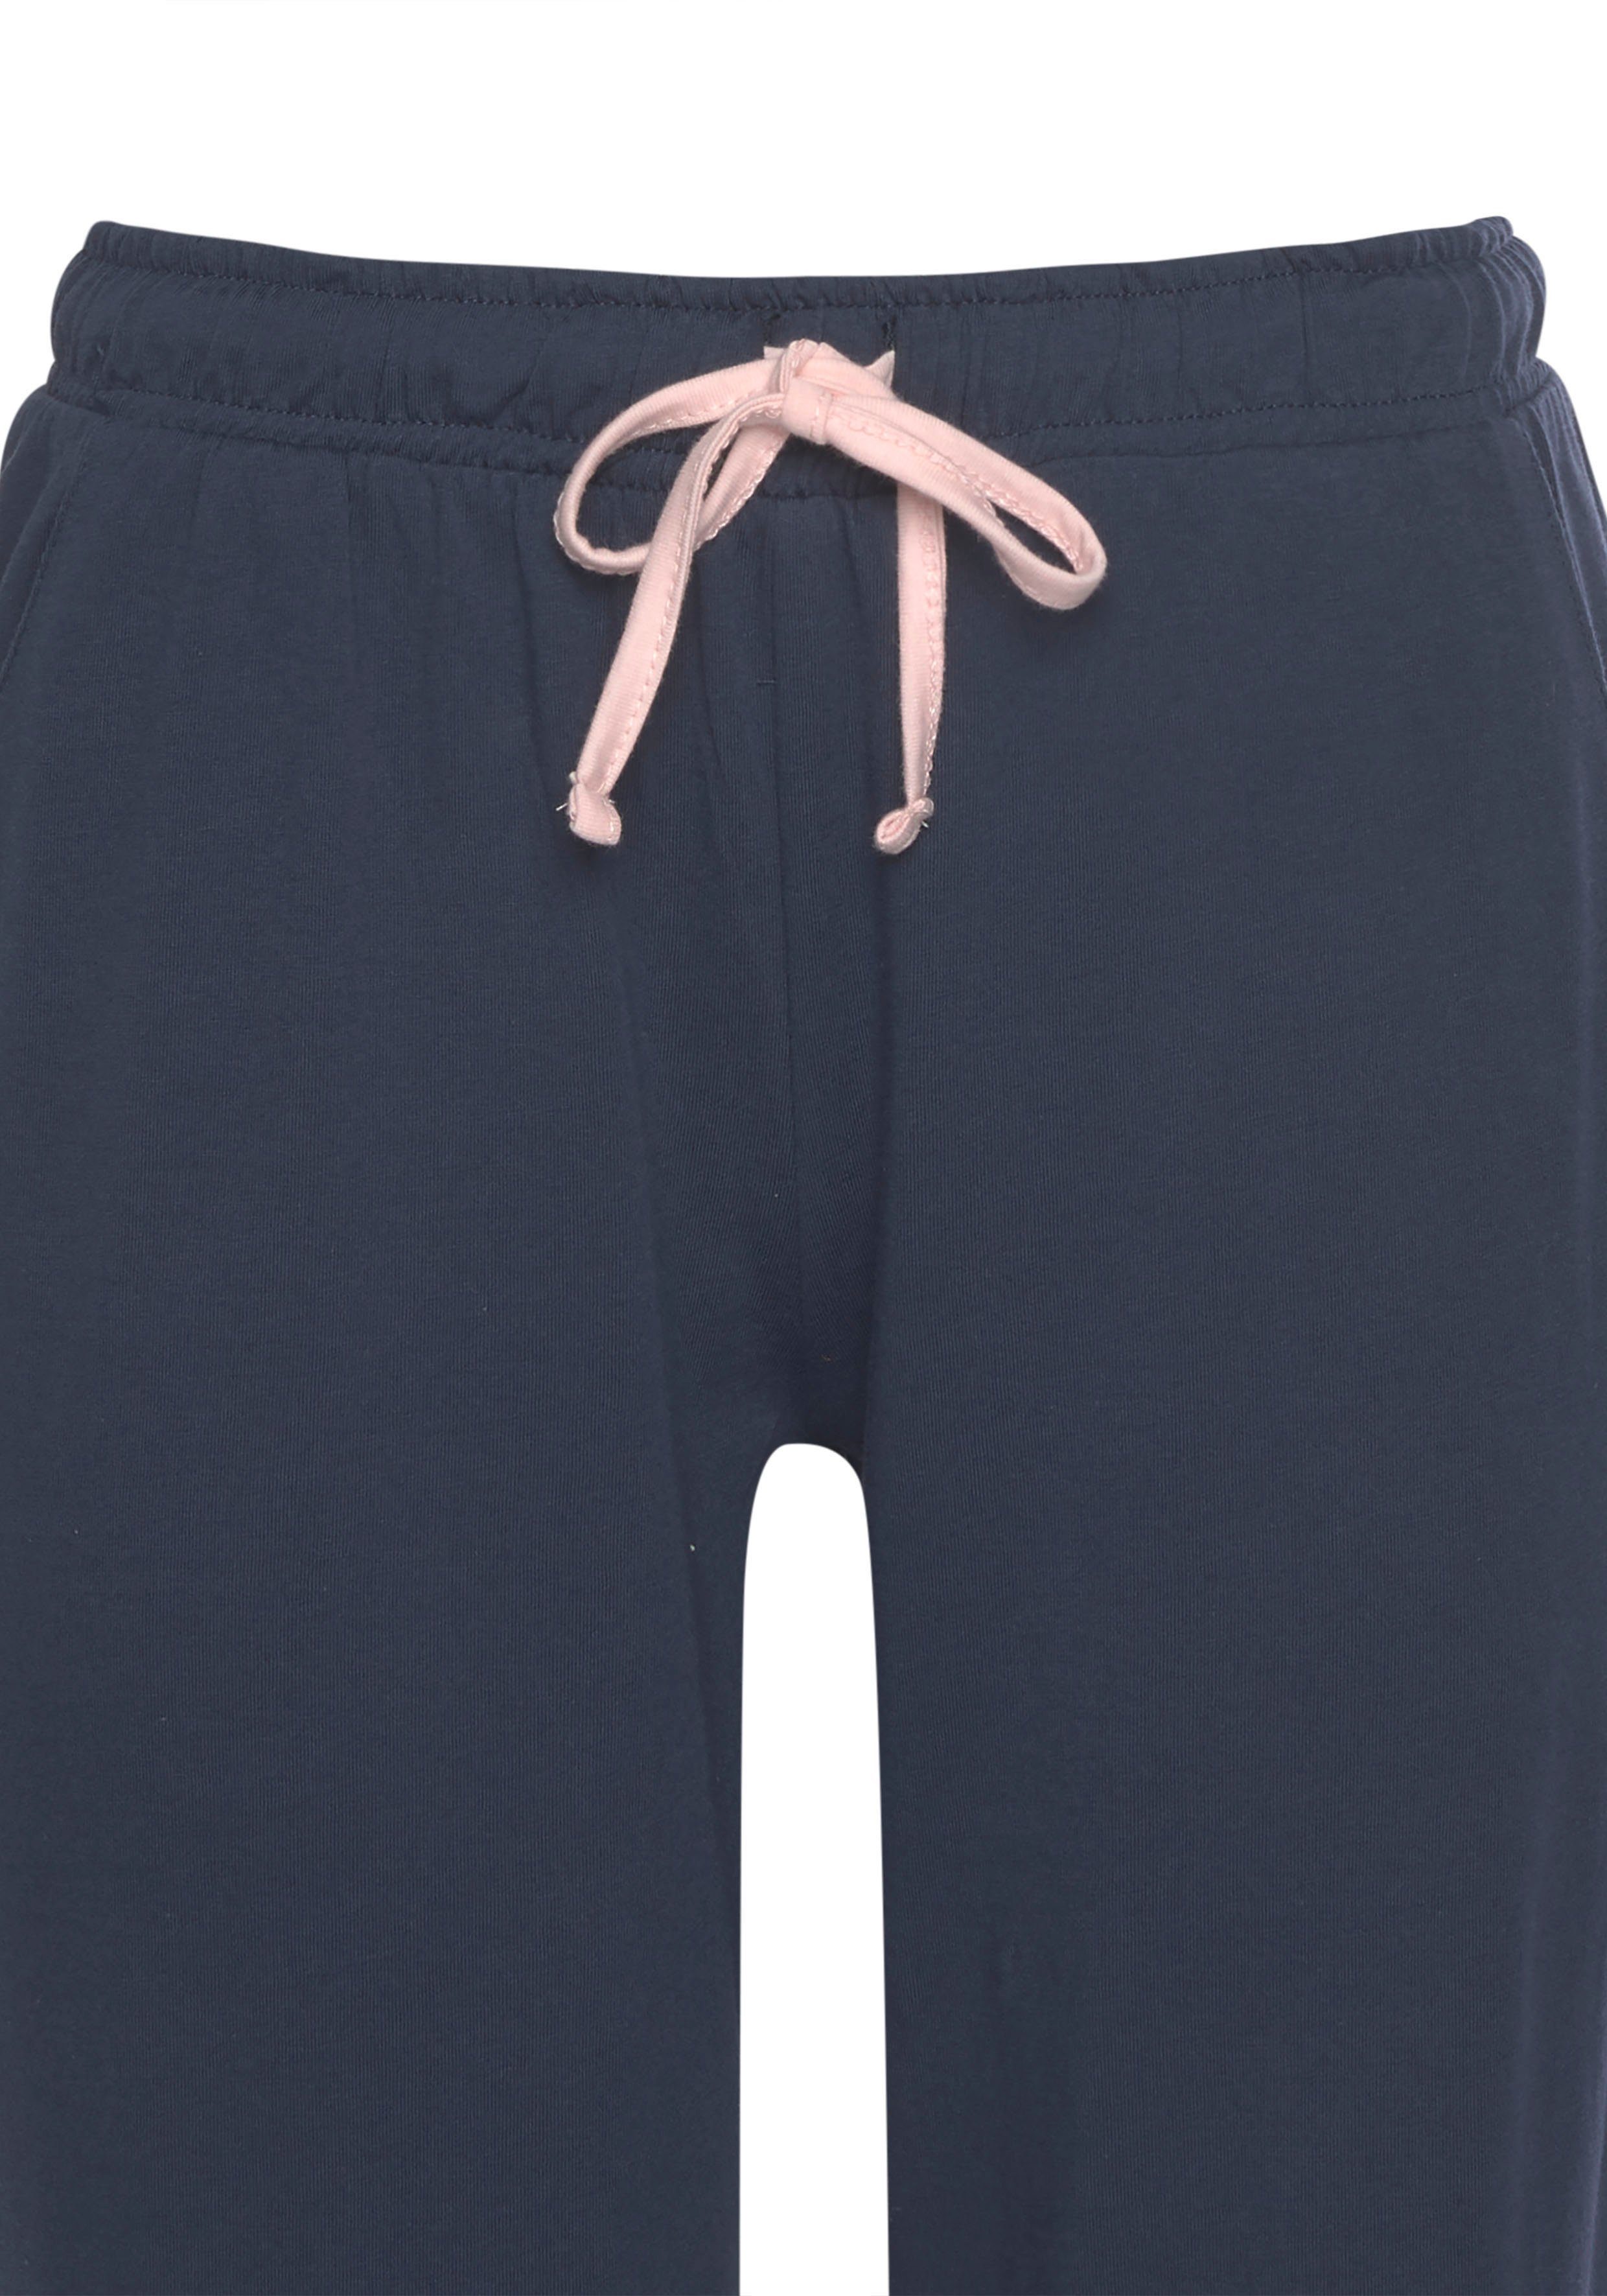 rosa-dunkelblau kontrastfarbenen tlg., 1 KangaROOS Stück) Pyjama (2 Raglanärmeln mit